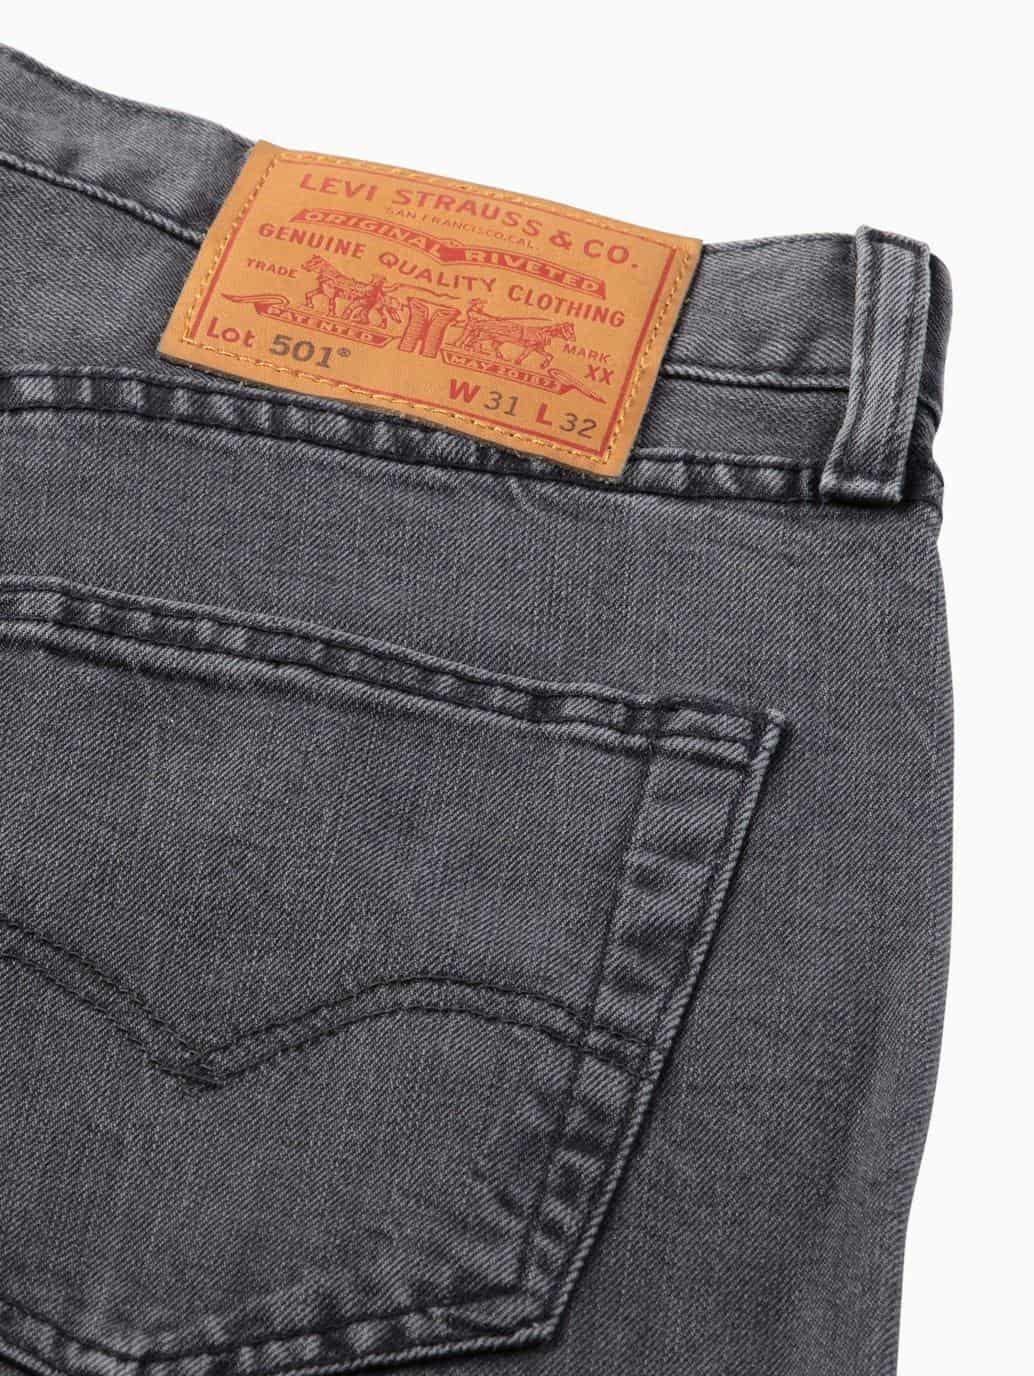 levis malaysia 501 original fit jeans for men parrish tag